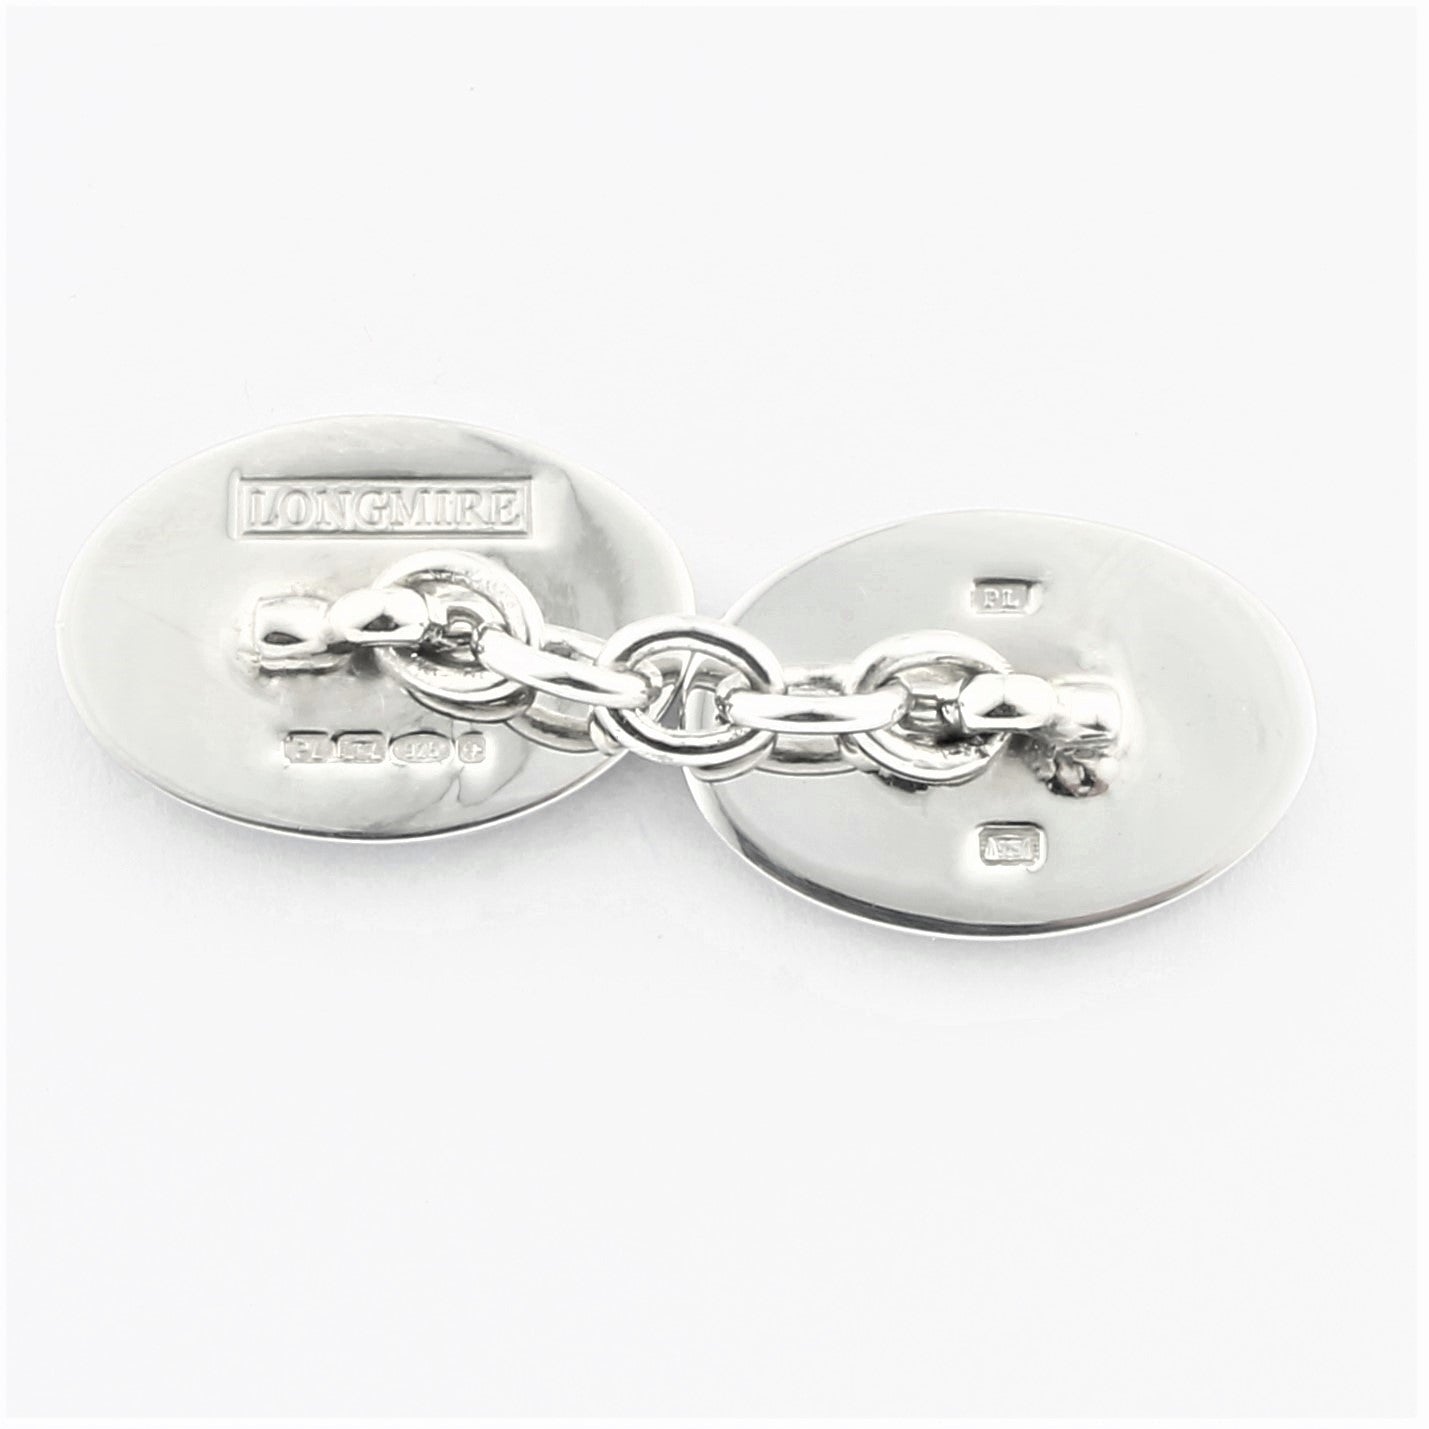 Double oval grey and white cufflinks in enamel on sterling silver - rear